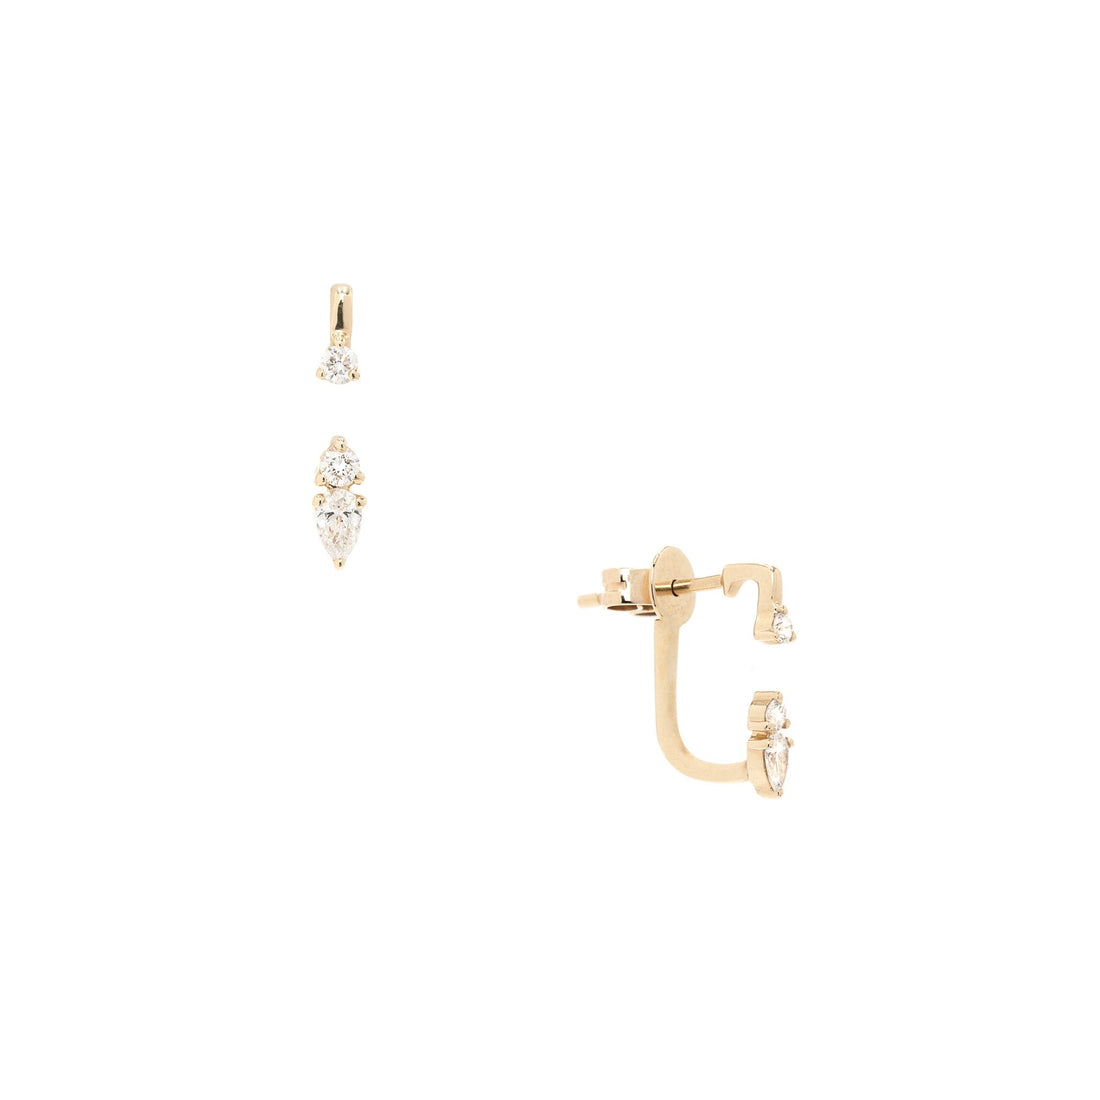 Sofia Earrings by Kasia Jewelry – Kasia J.